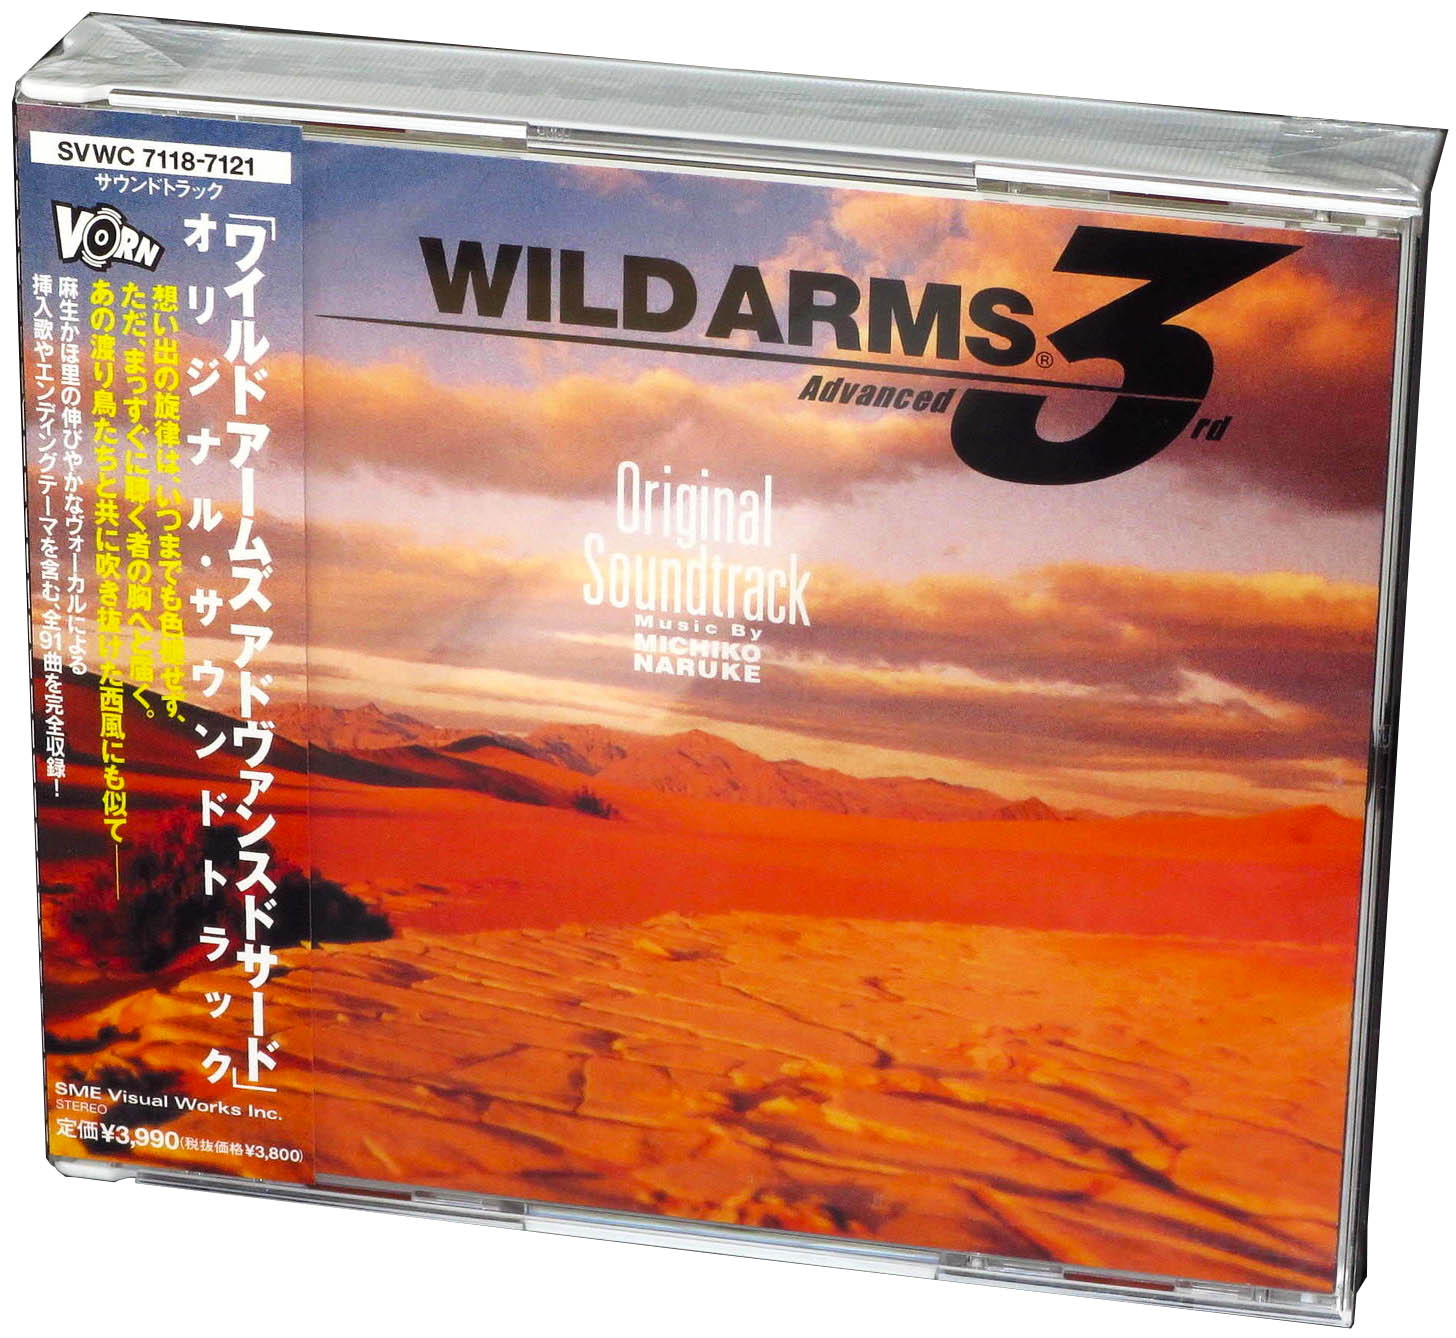 Wild Arms Advanced 3rd Original Soundtrack Вид спереди